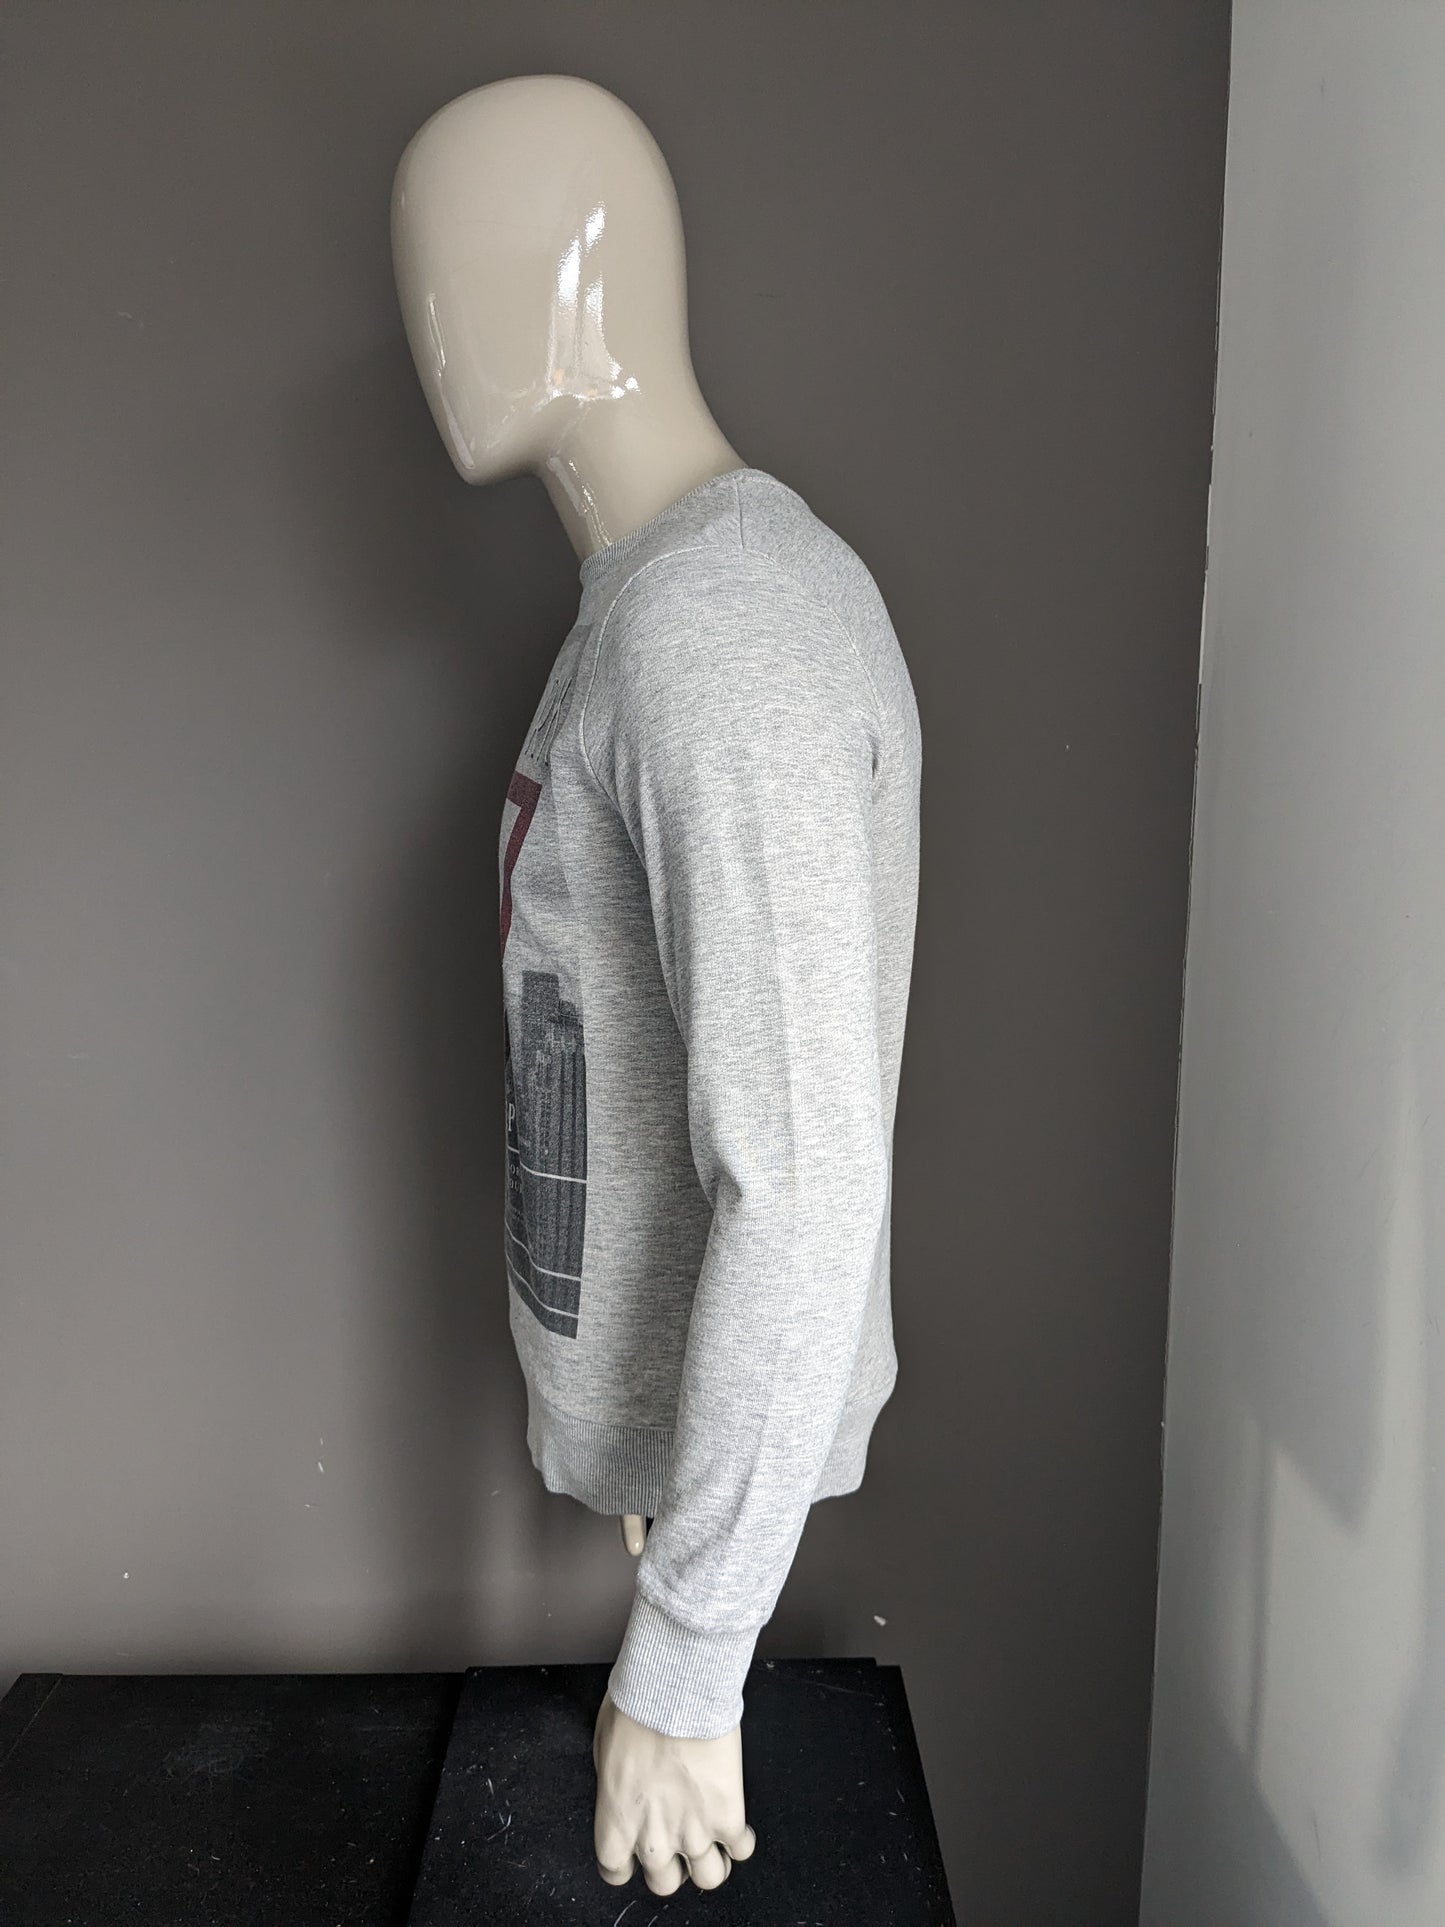 Burton London Menswear Casual sweater. Gray mixed. Size M.